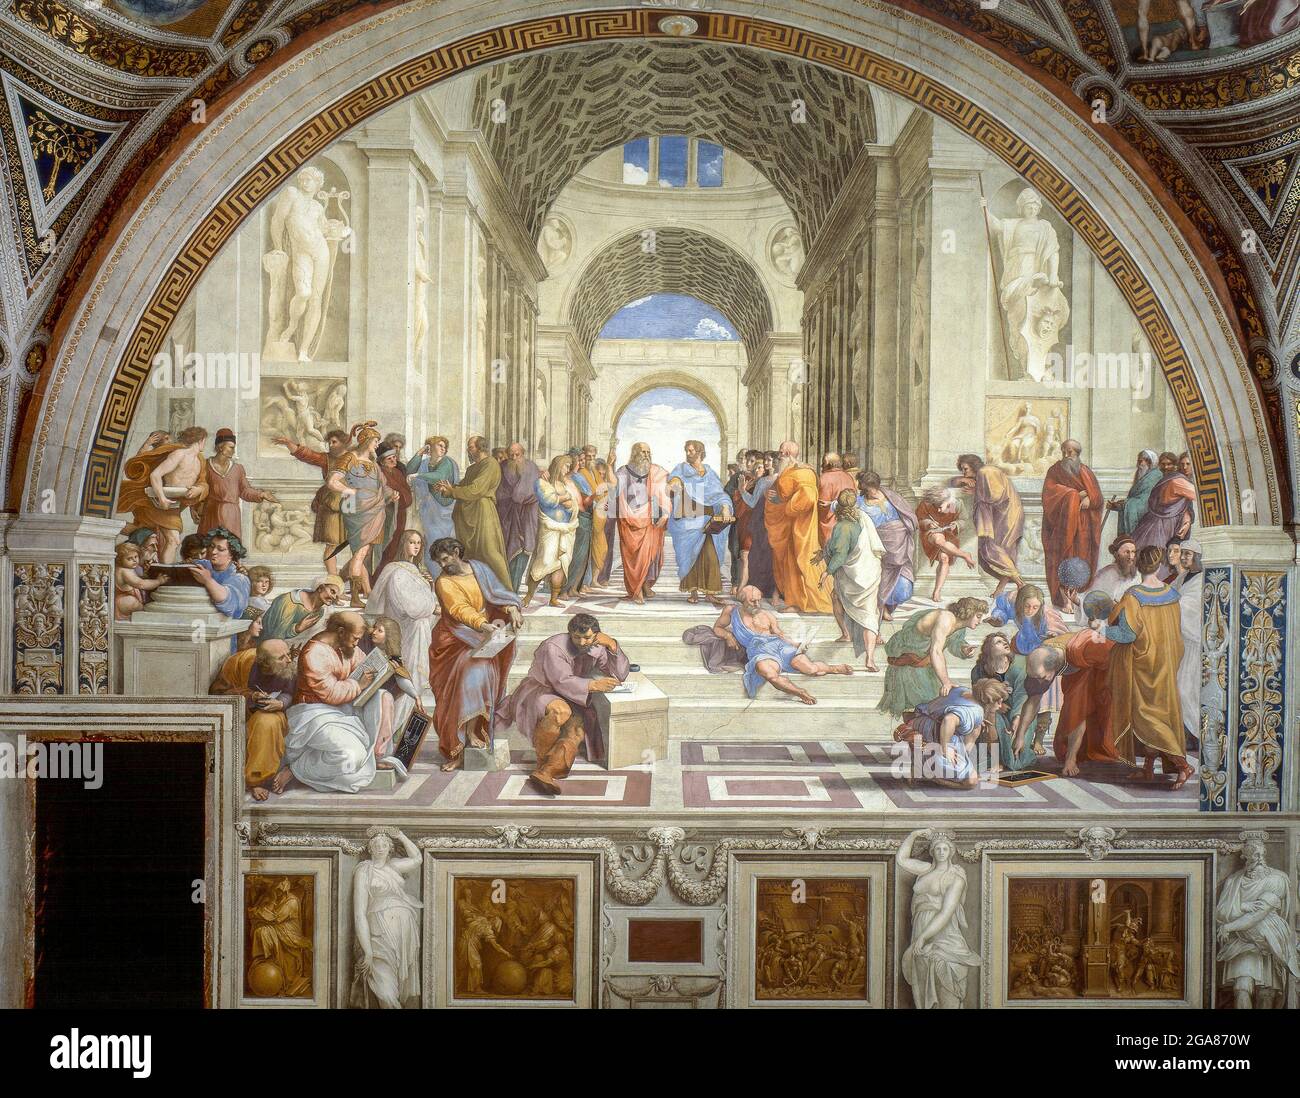 ON-DEMAND – Raphael Santi/Sanzio – Celebrating His Art 500 Years